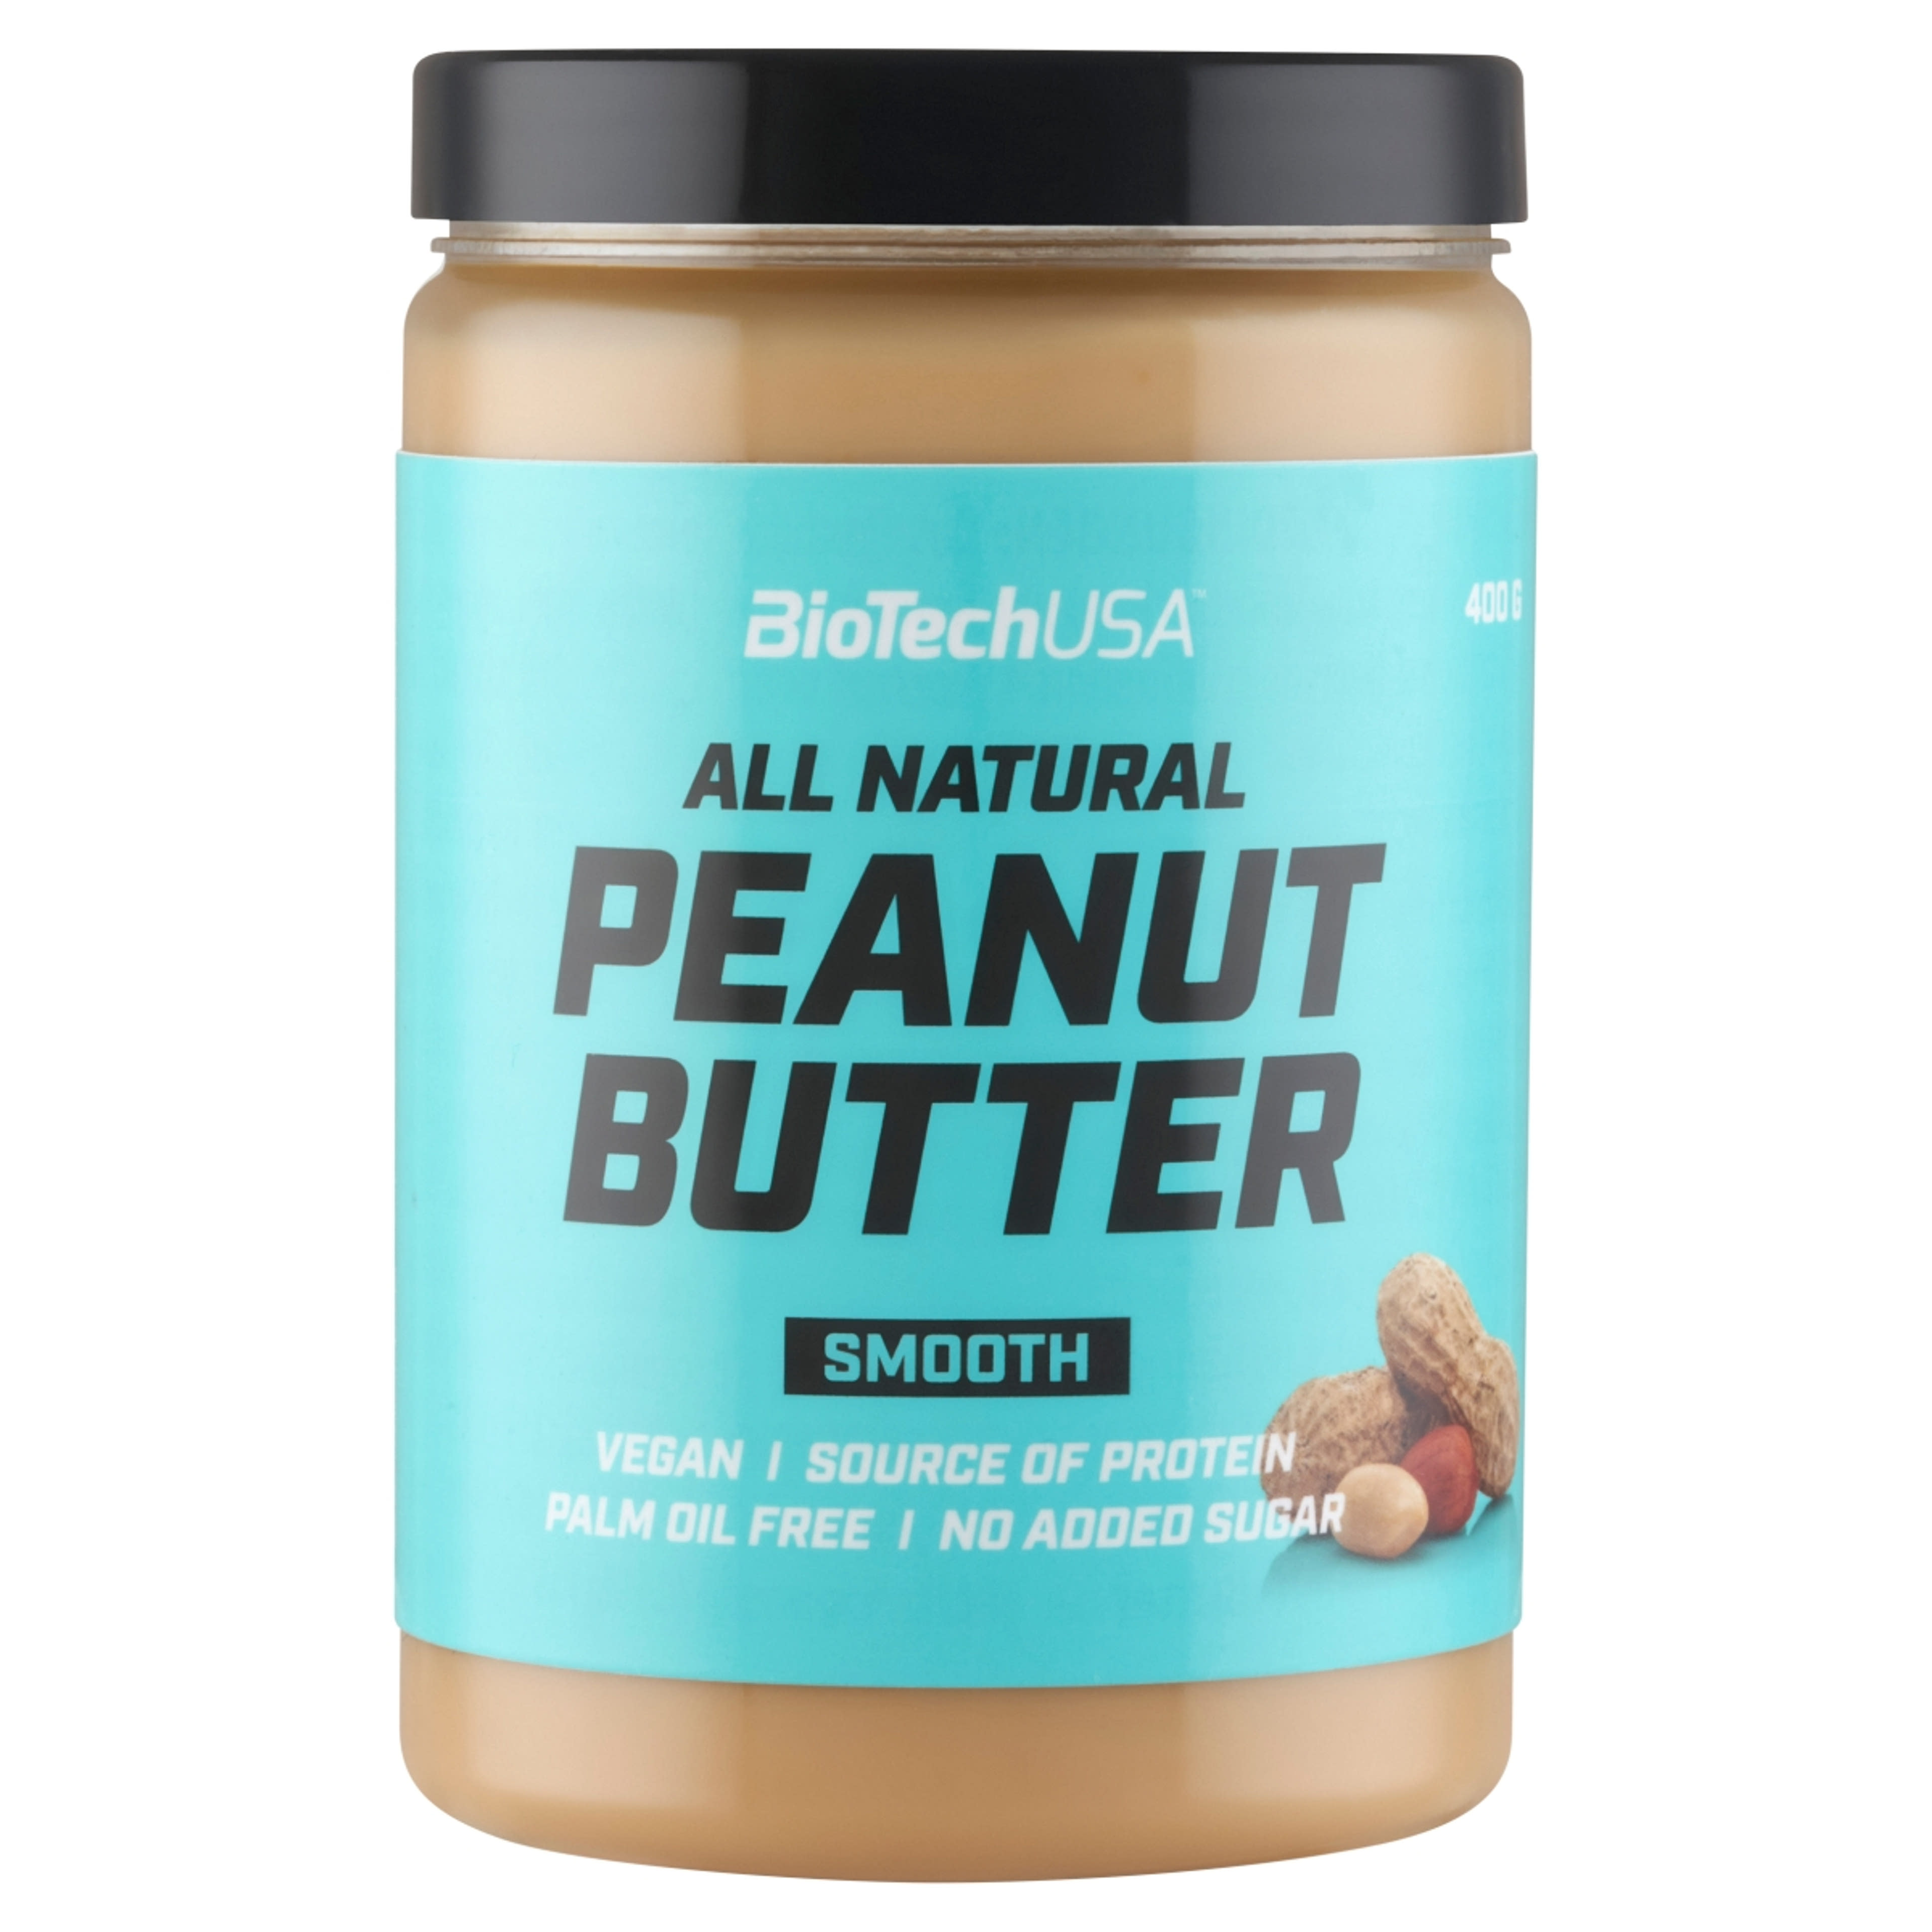 BioTechUSA Peanut Butter smooth - 400 g